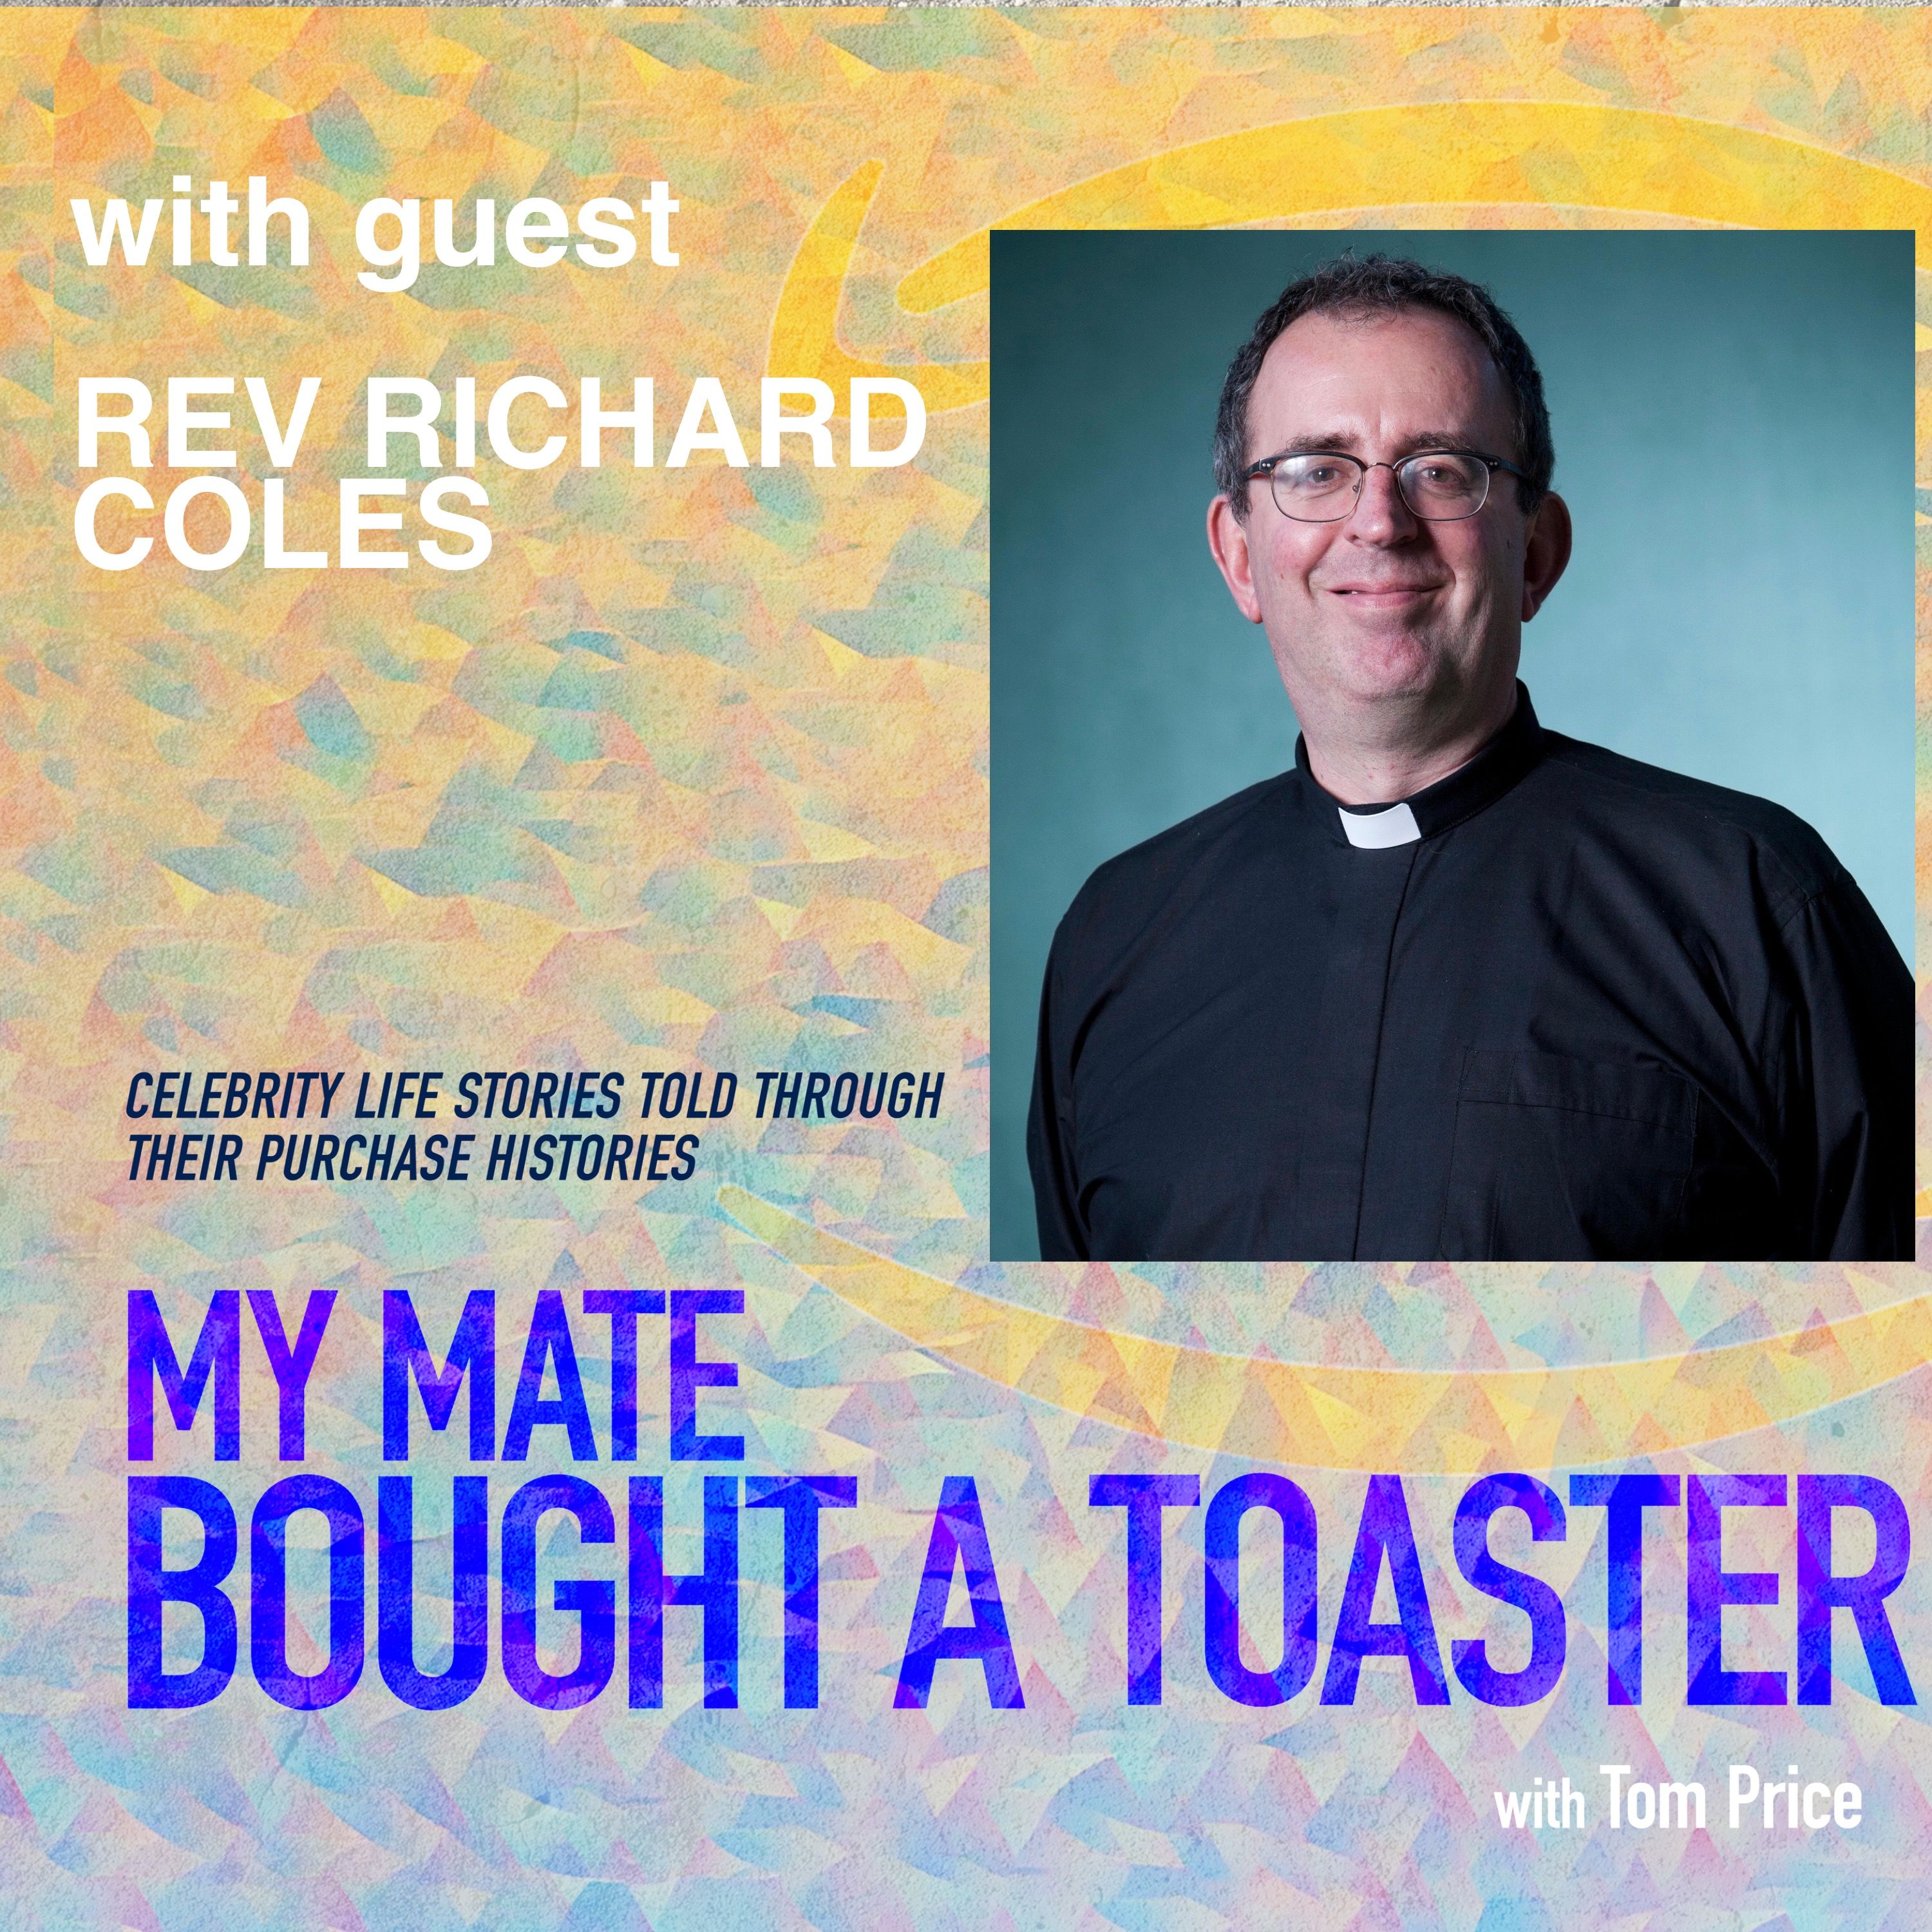 Rev Richard Coles